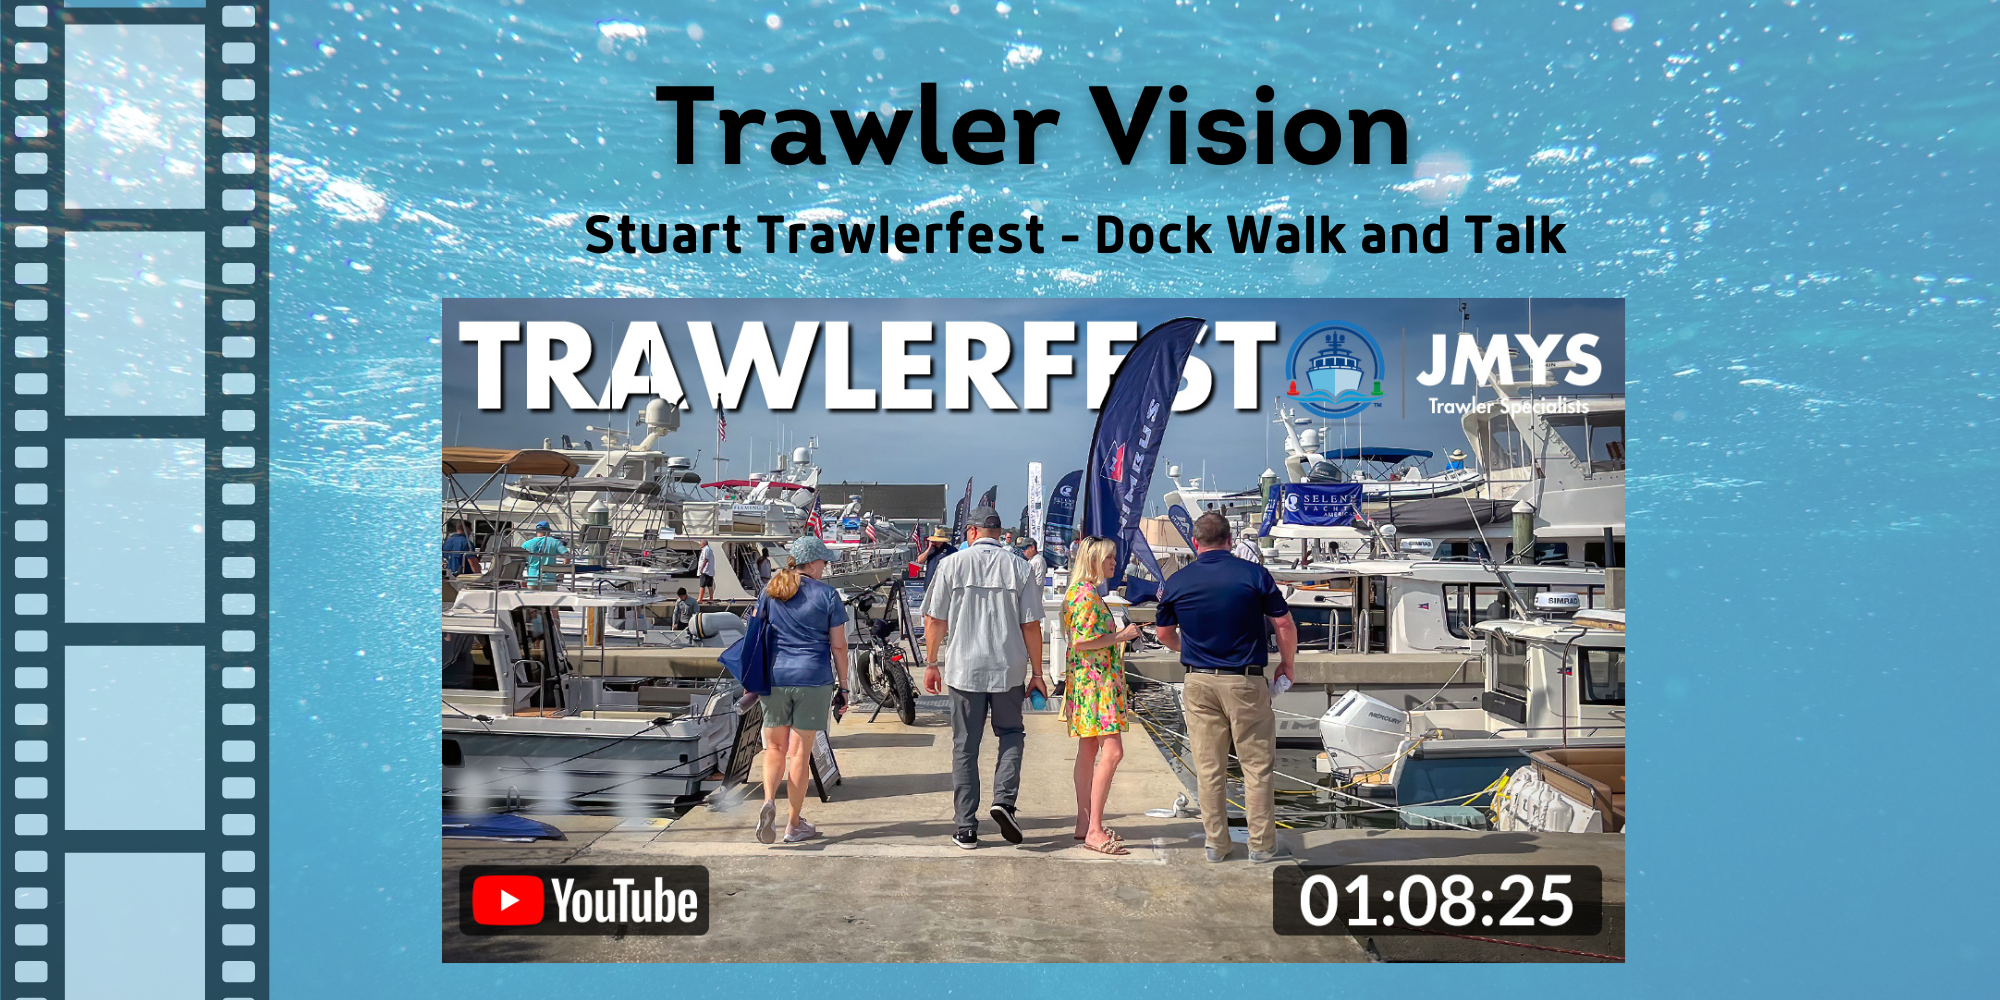 trawler yachts on youtube